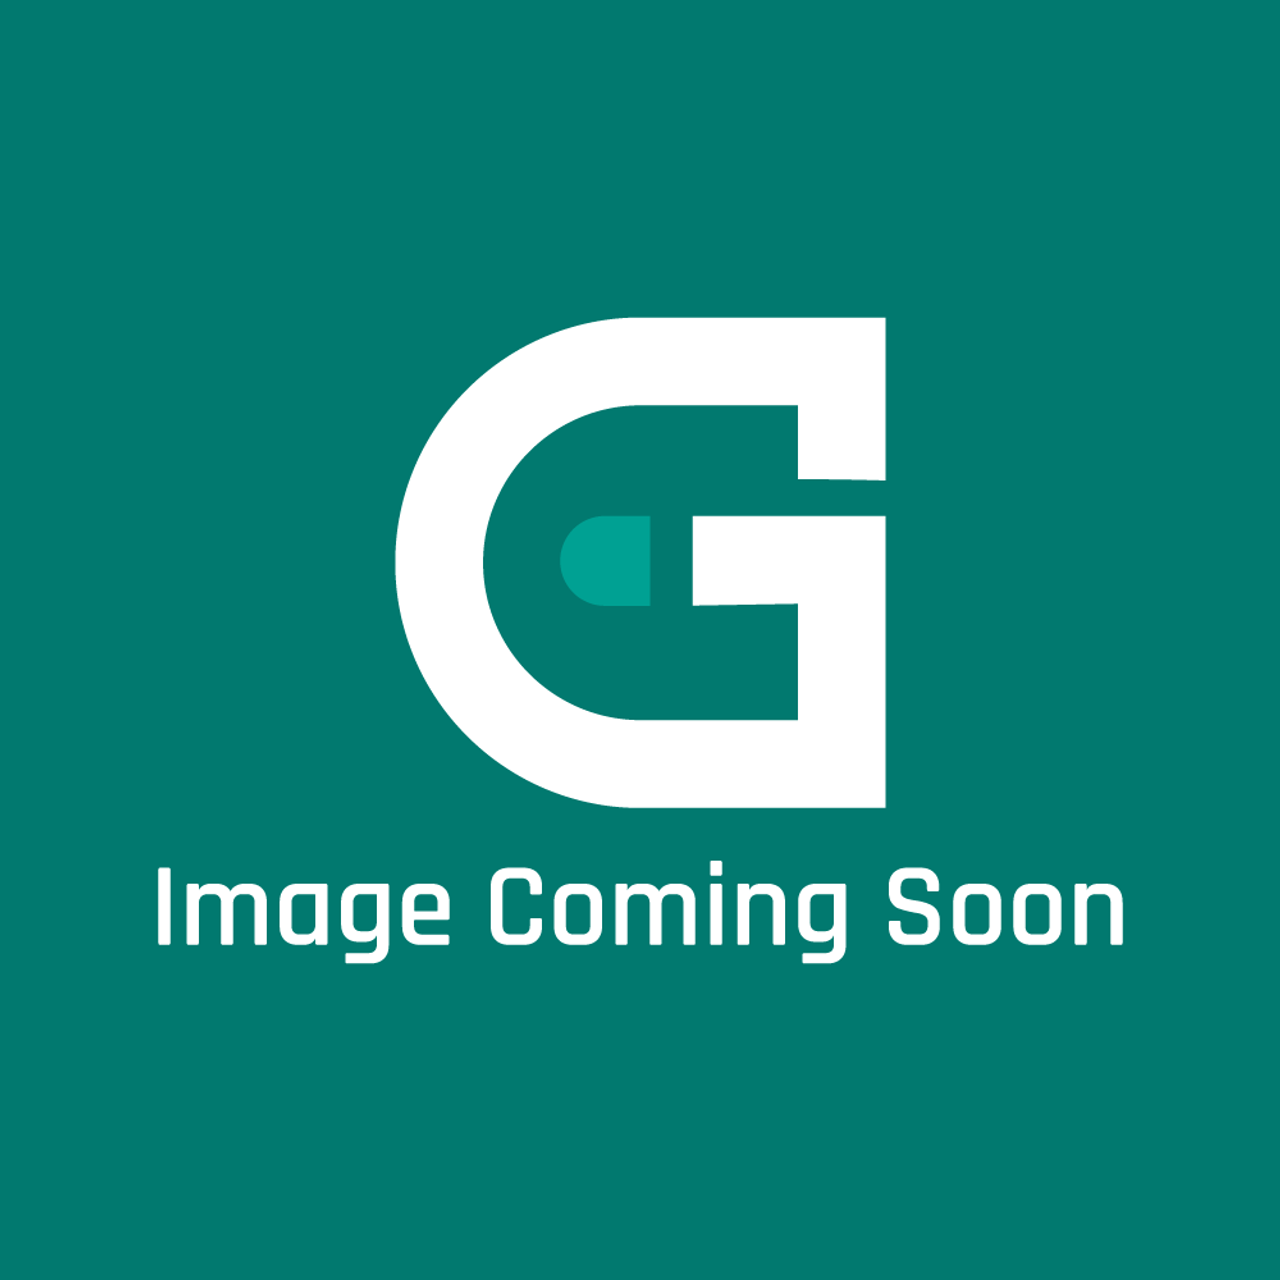 AGA Marvel SAG-AE9V231576 - Plinth Rh-Lh Side AGA Marvel Tc 2 - Image Coming Soon!